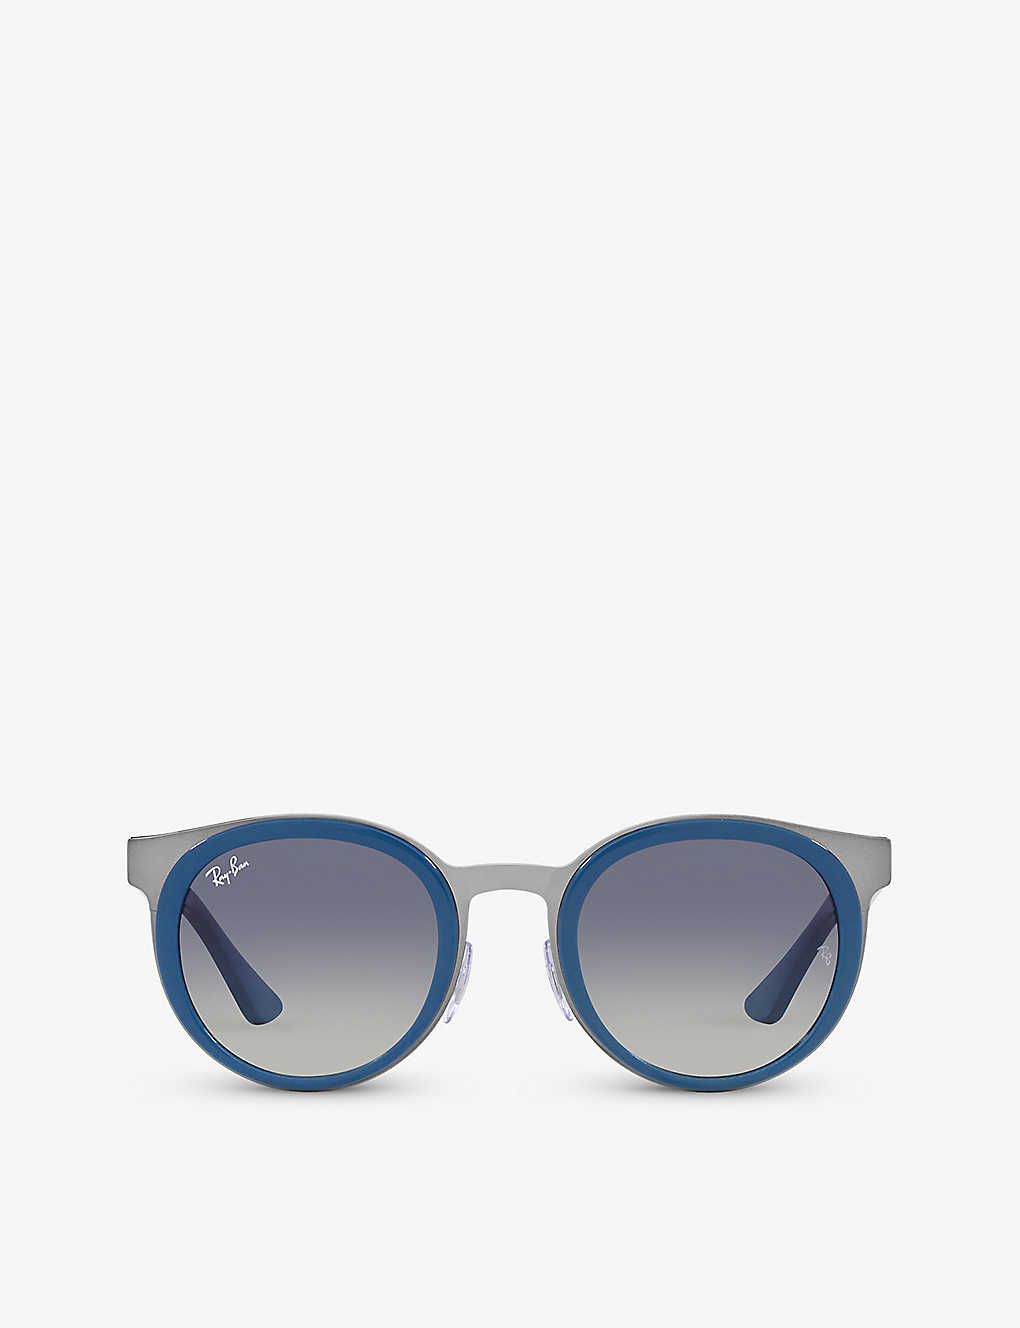 Ray Ban Sunglasses Unisex Bonnie - Light Blue Frame Grey Lenses 50-24